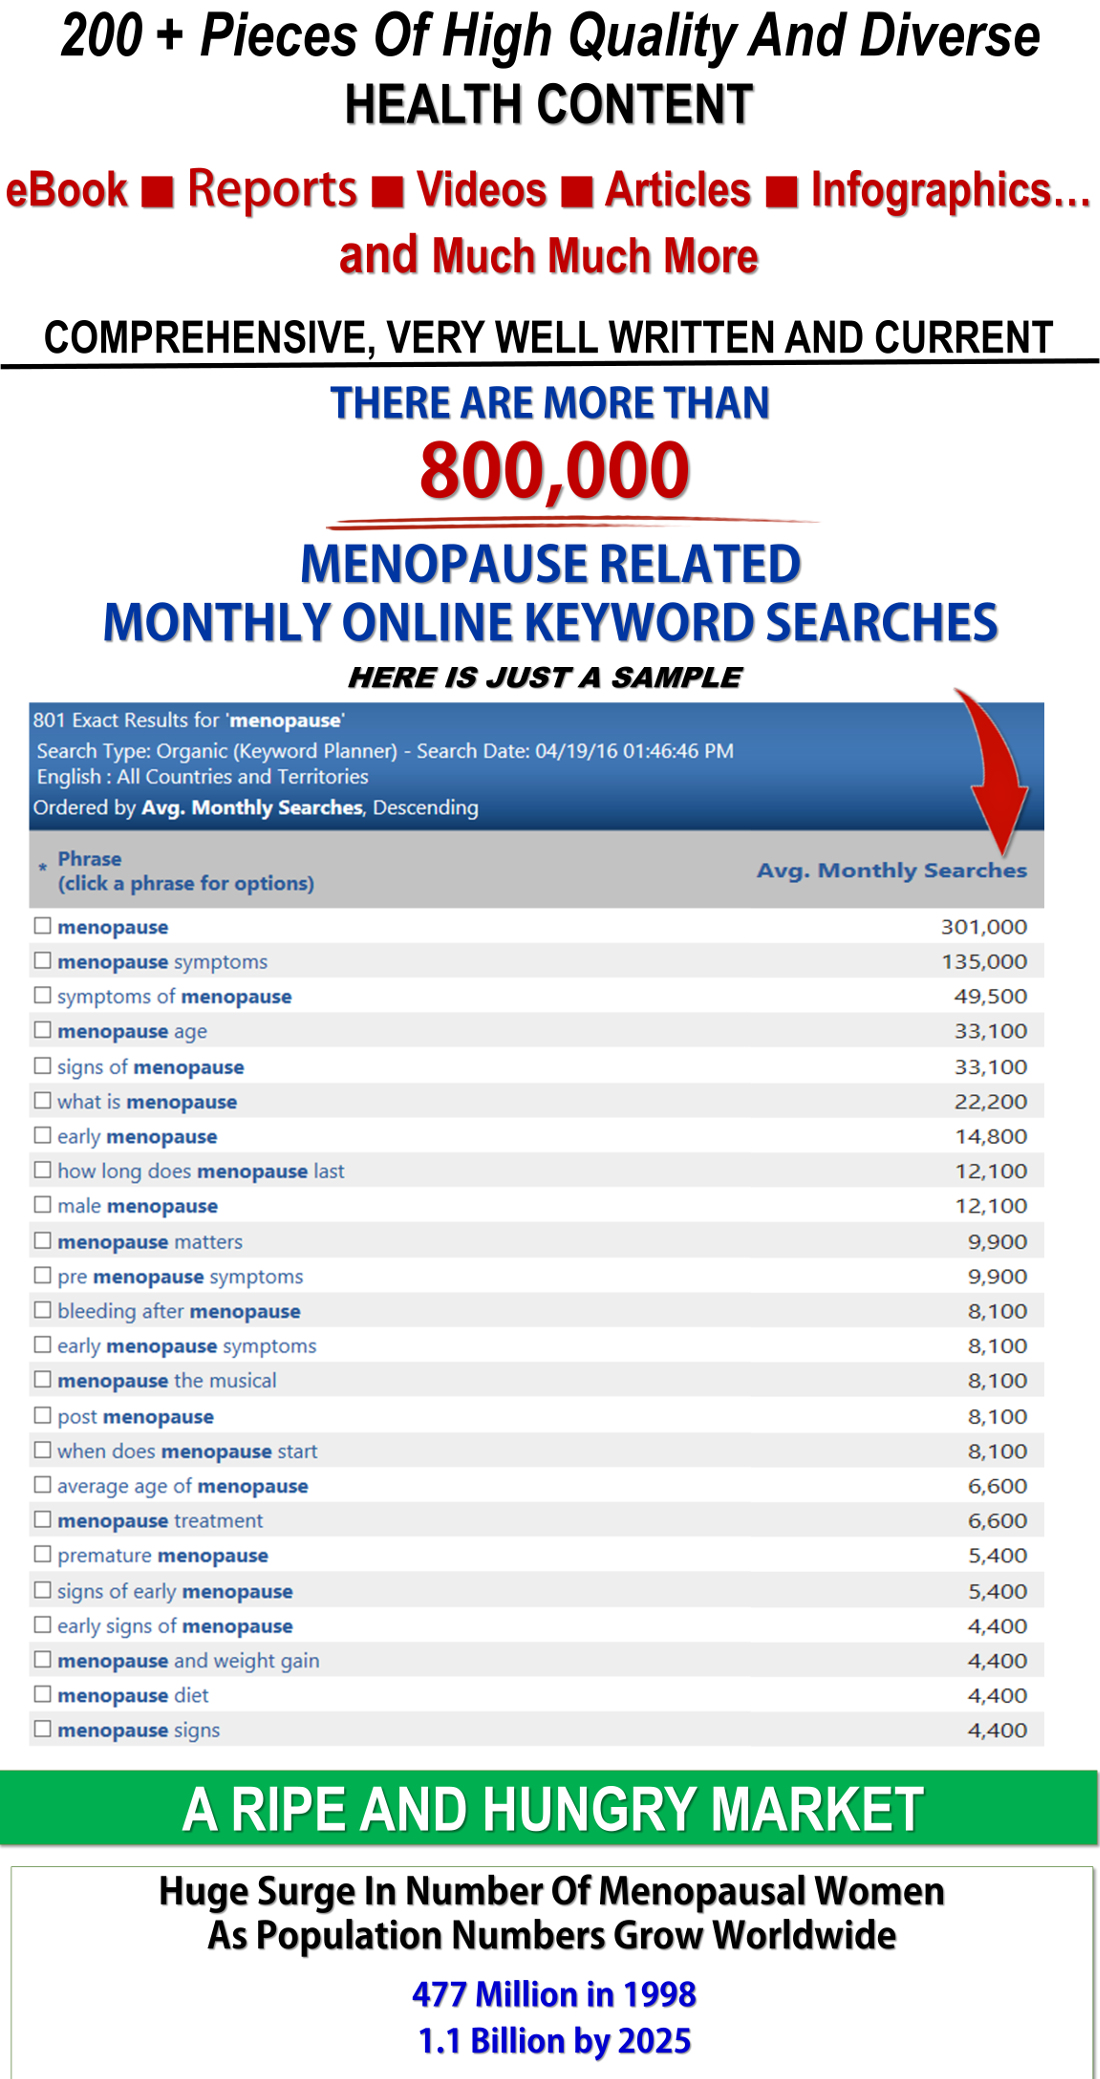 Giant Menopause PLR: eBooks, Videos, Infographics, Articles